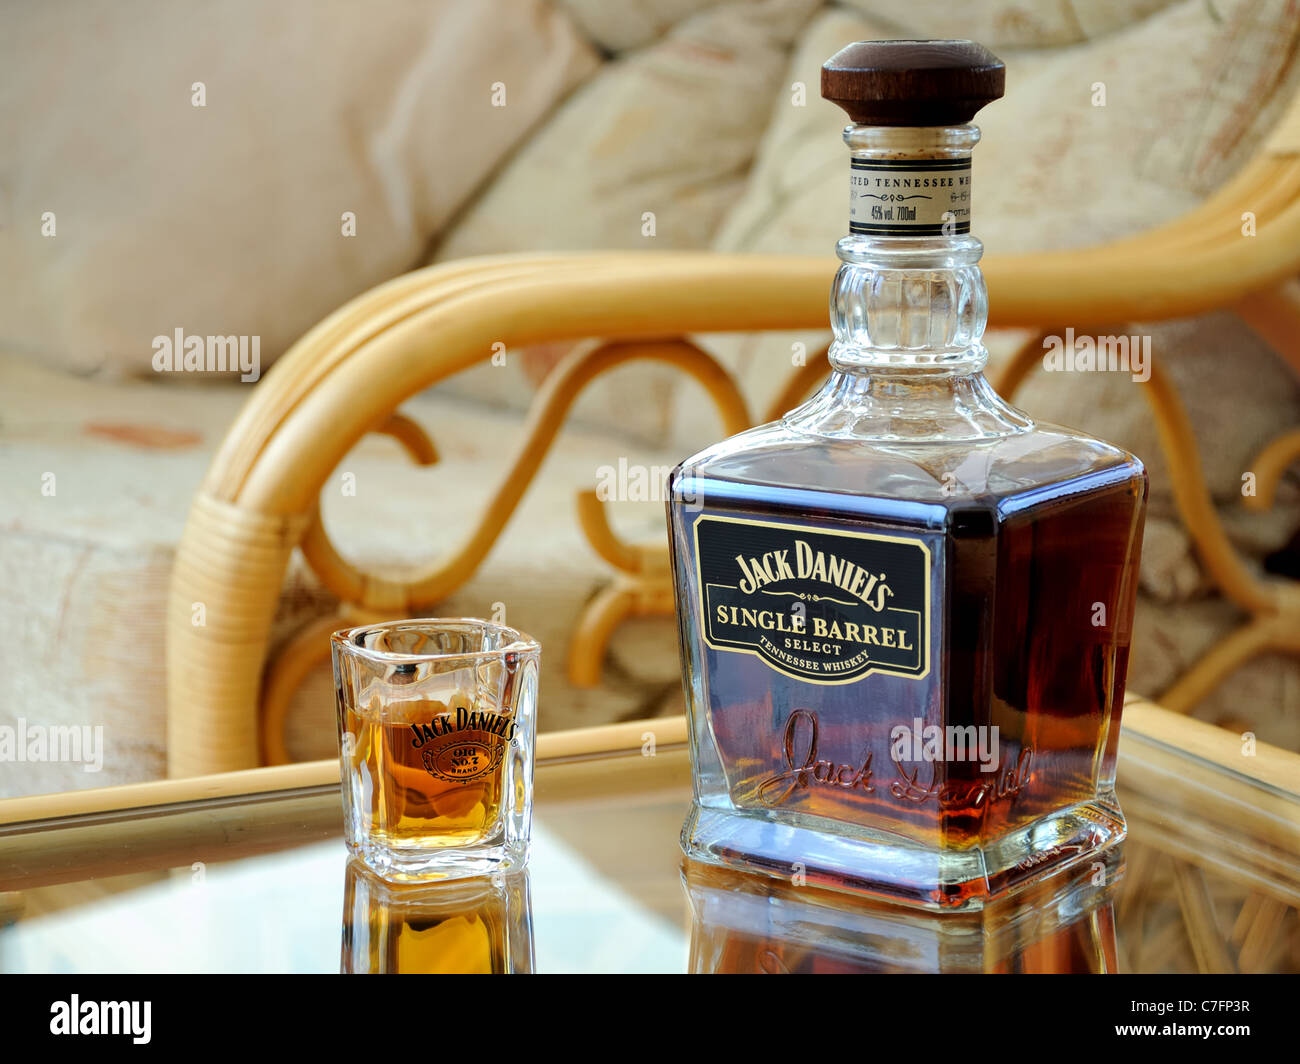 Jack Daniels Single Barrel bottle and glass on table Stock Photo - Alamy